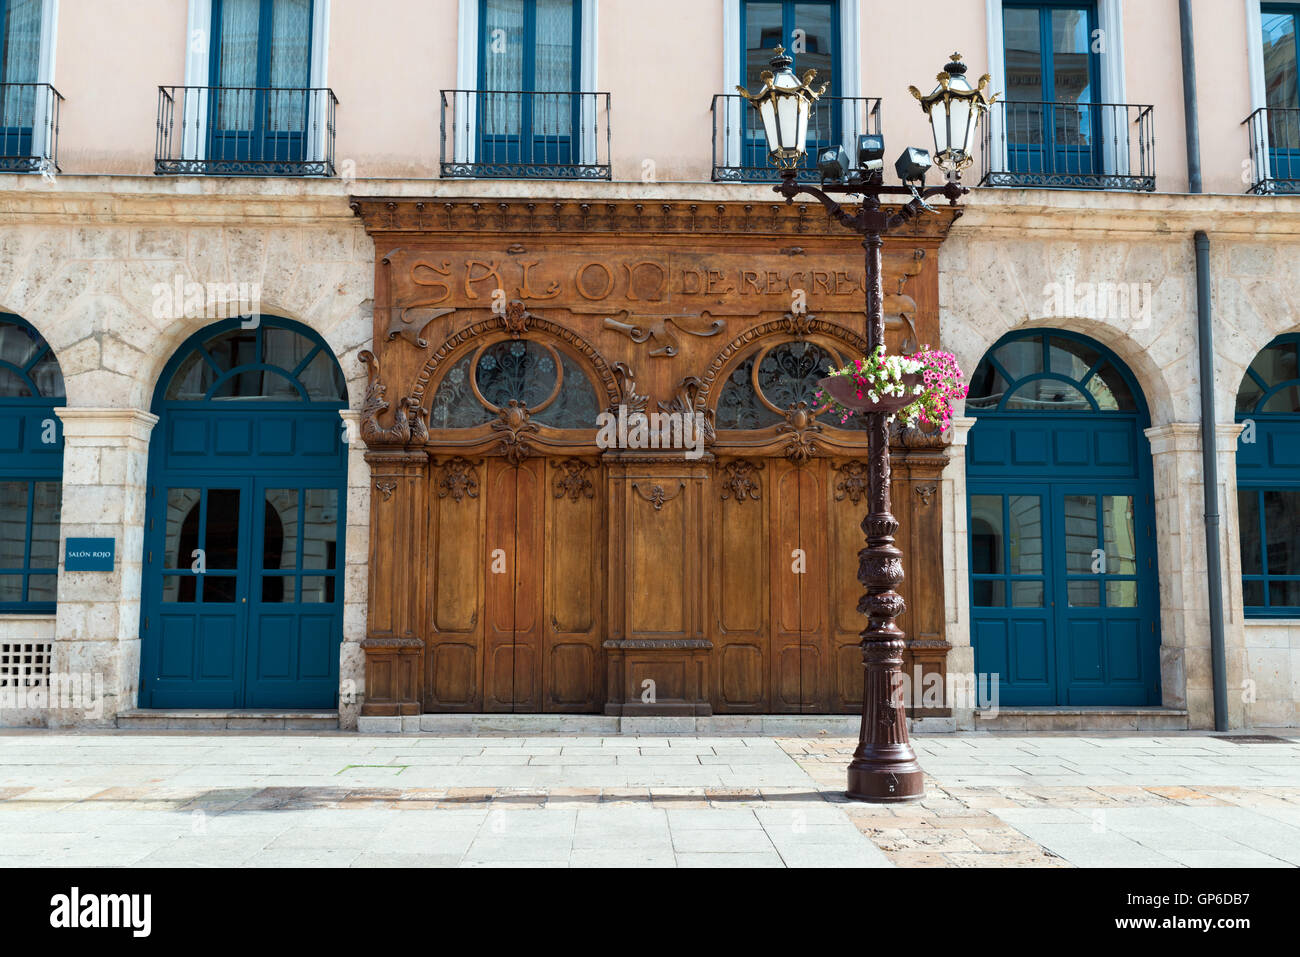 BURGOS, SPAIN - 31 AUGUST, 2016: Salon Recreativo (Recreational room), wooden facade built in Art Nouveau style in the historic Stock Photo